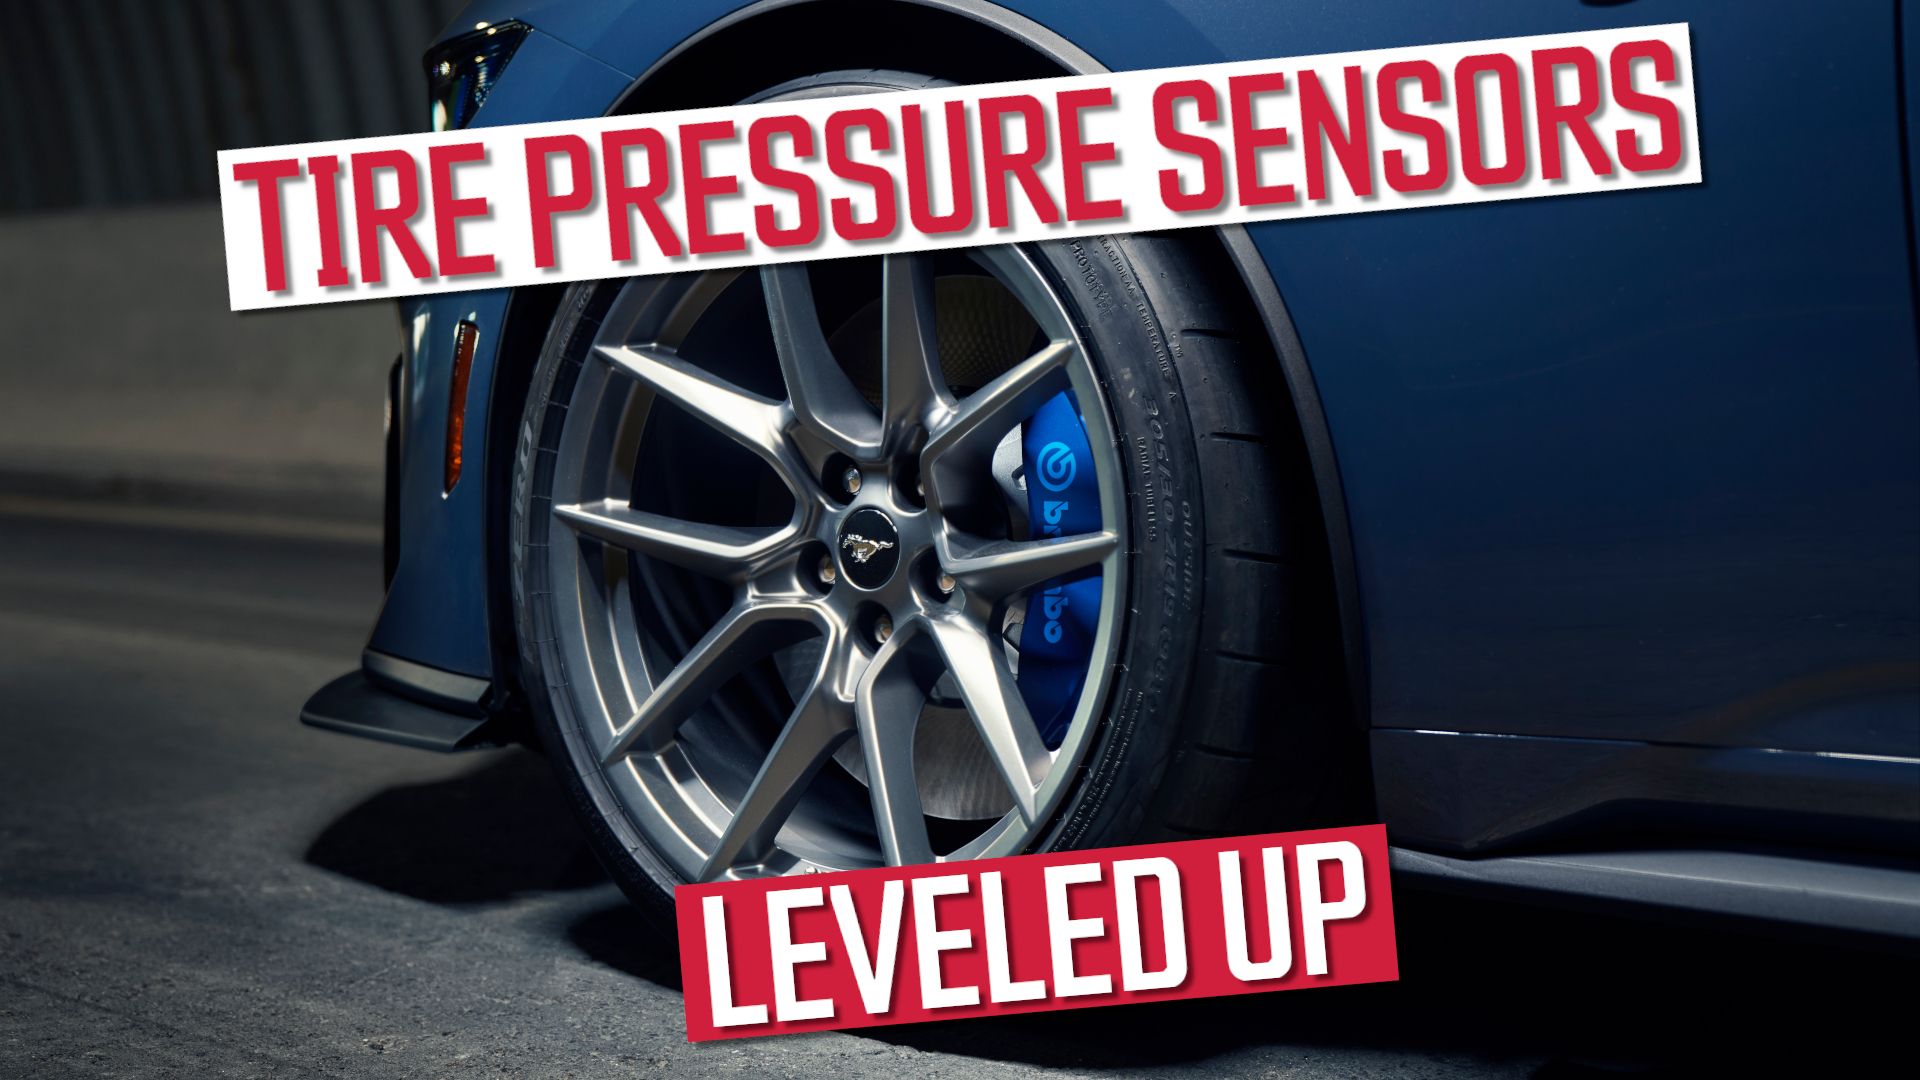 Ford Tire Pressure Sensors Patent